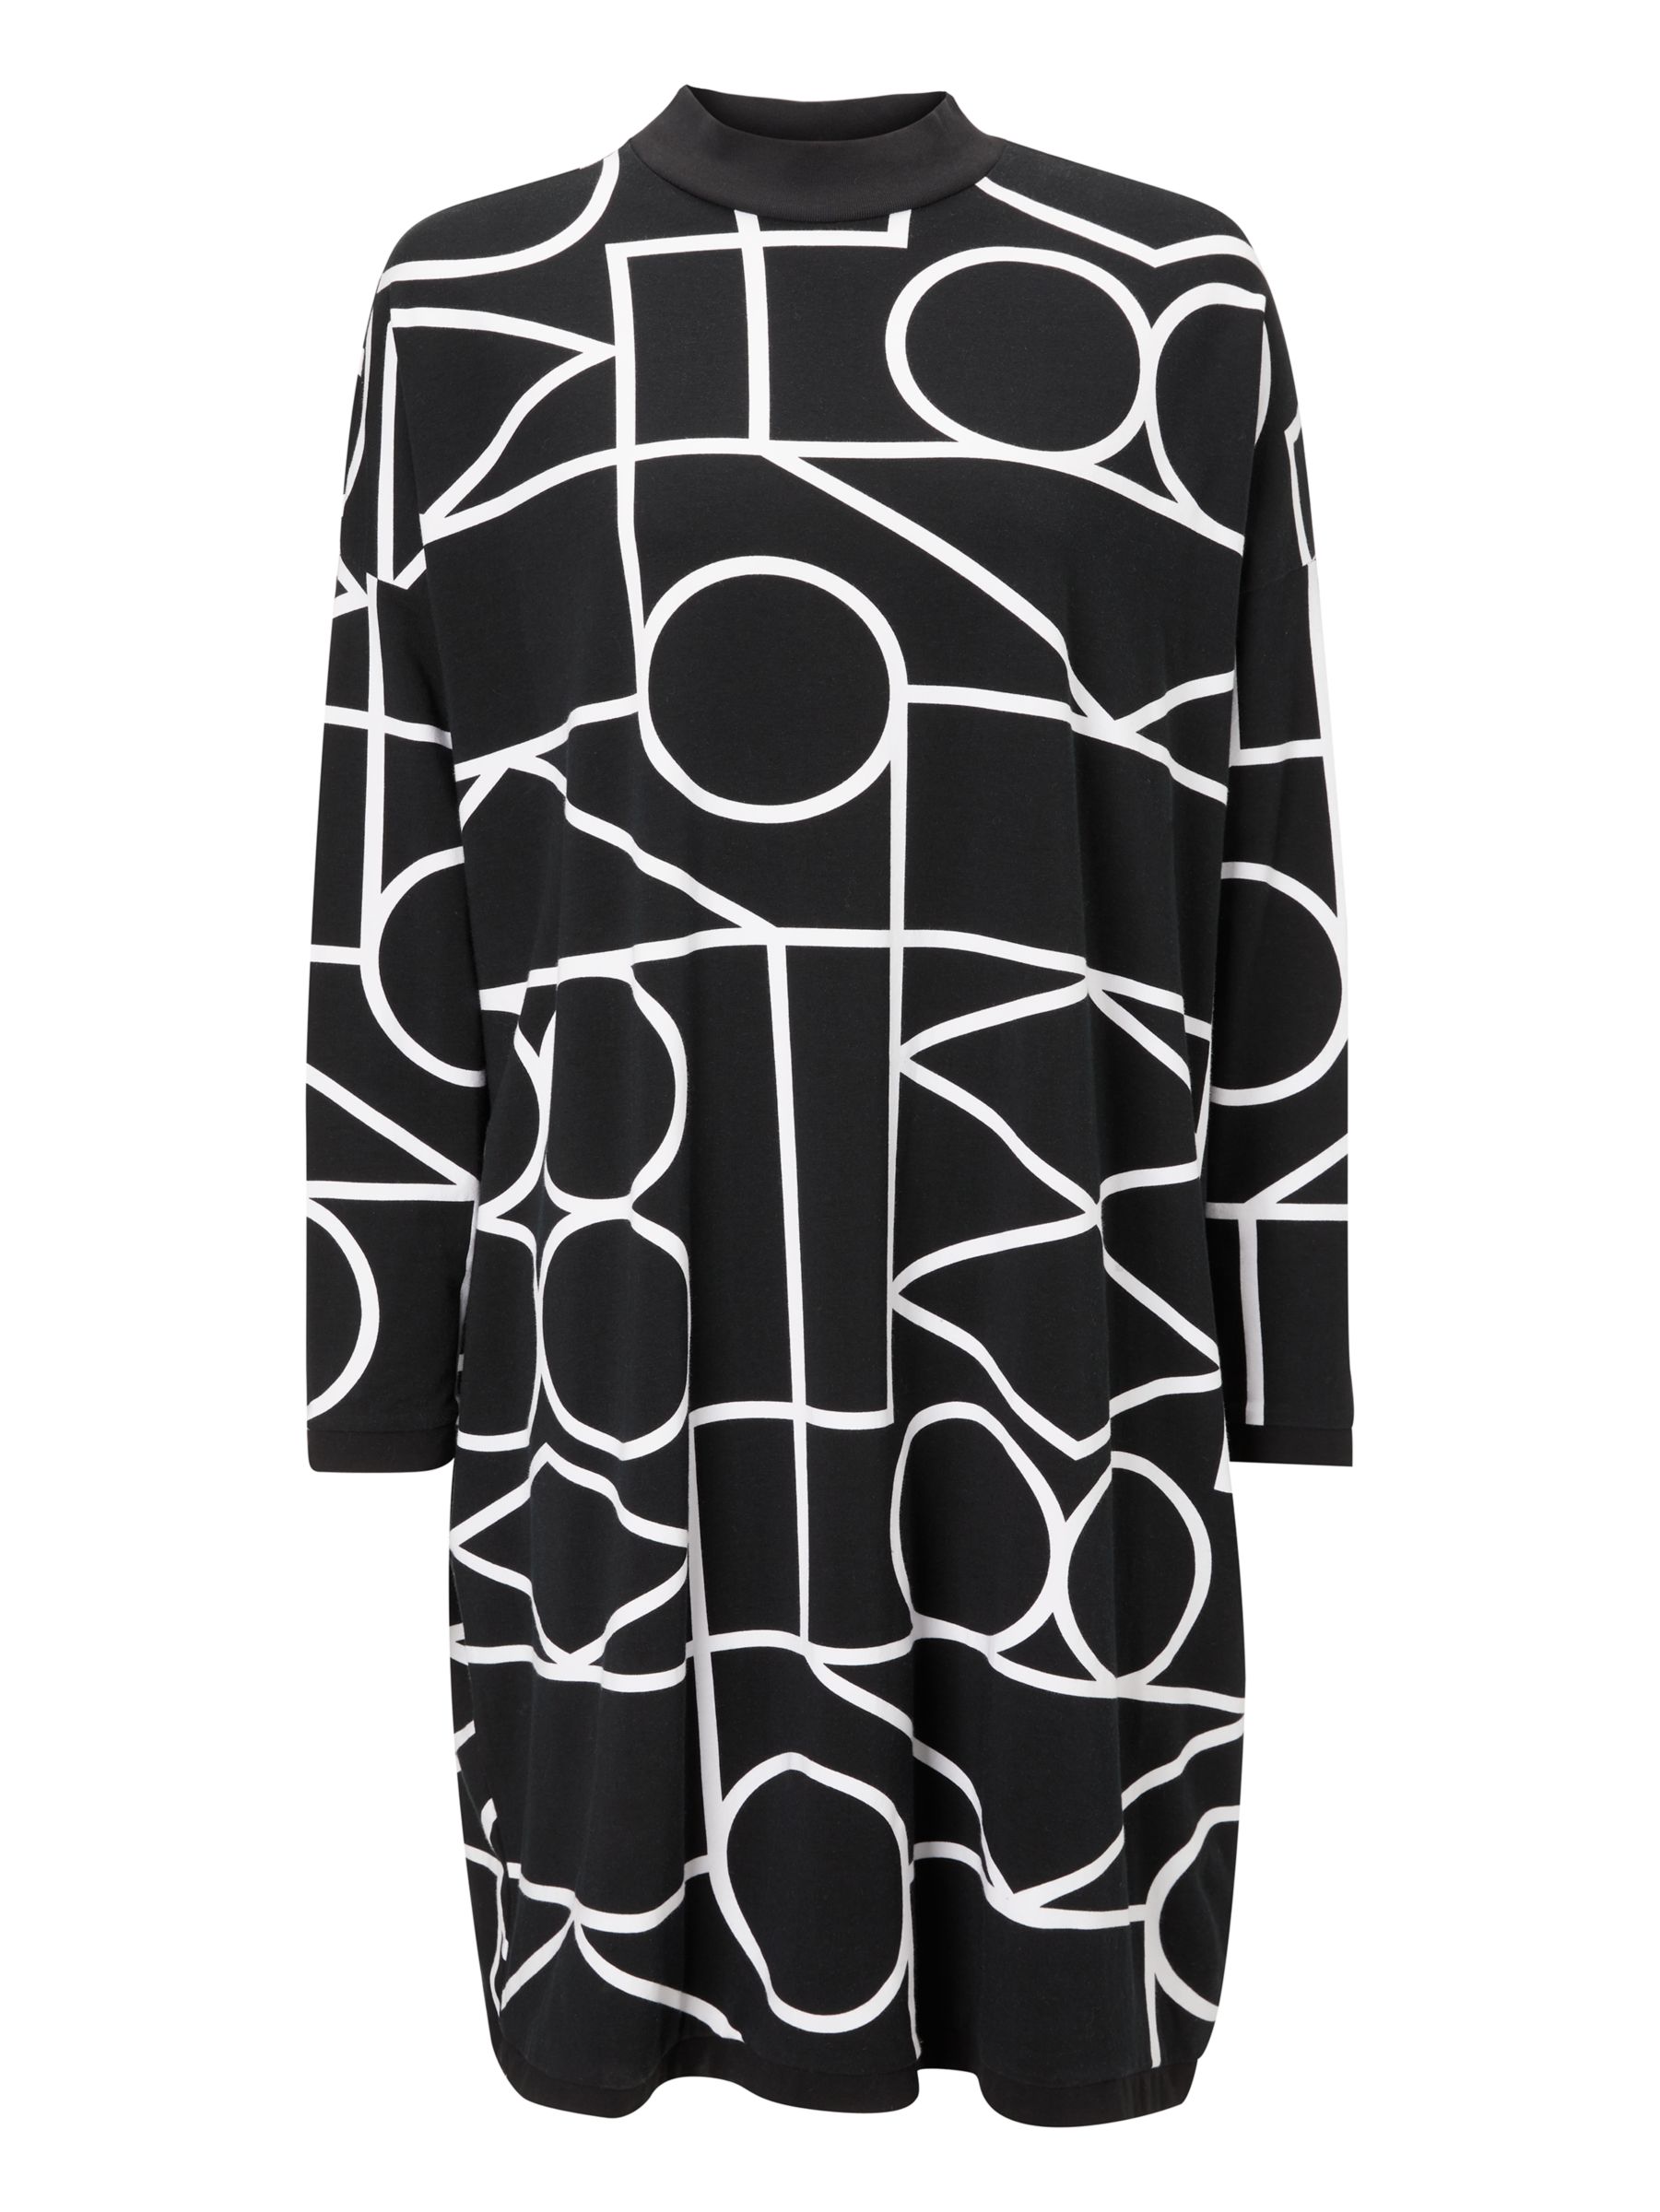 PATTERNITY + John Lewis Oversized Signature Outline Dress, Black/White